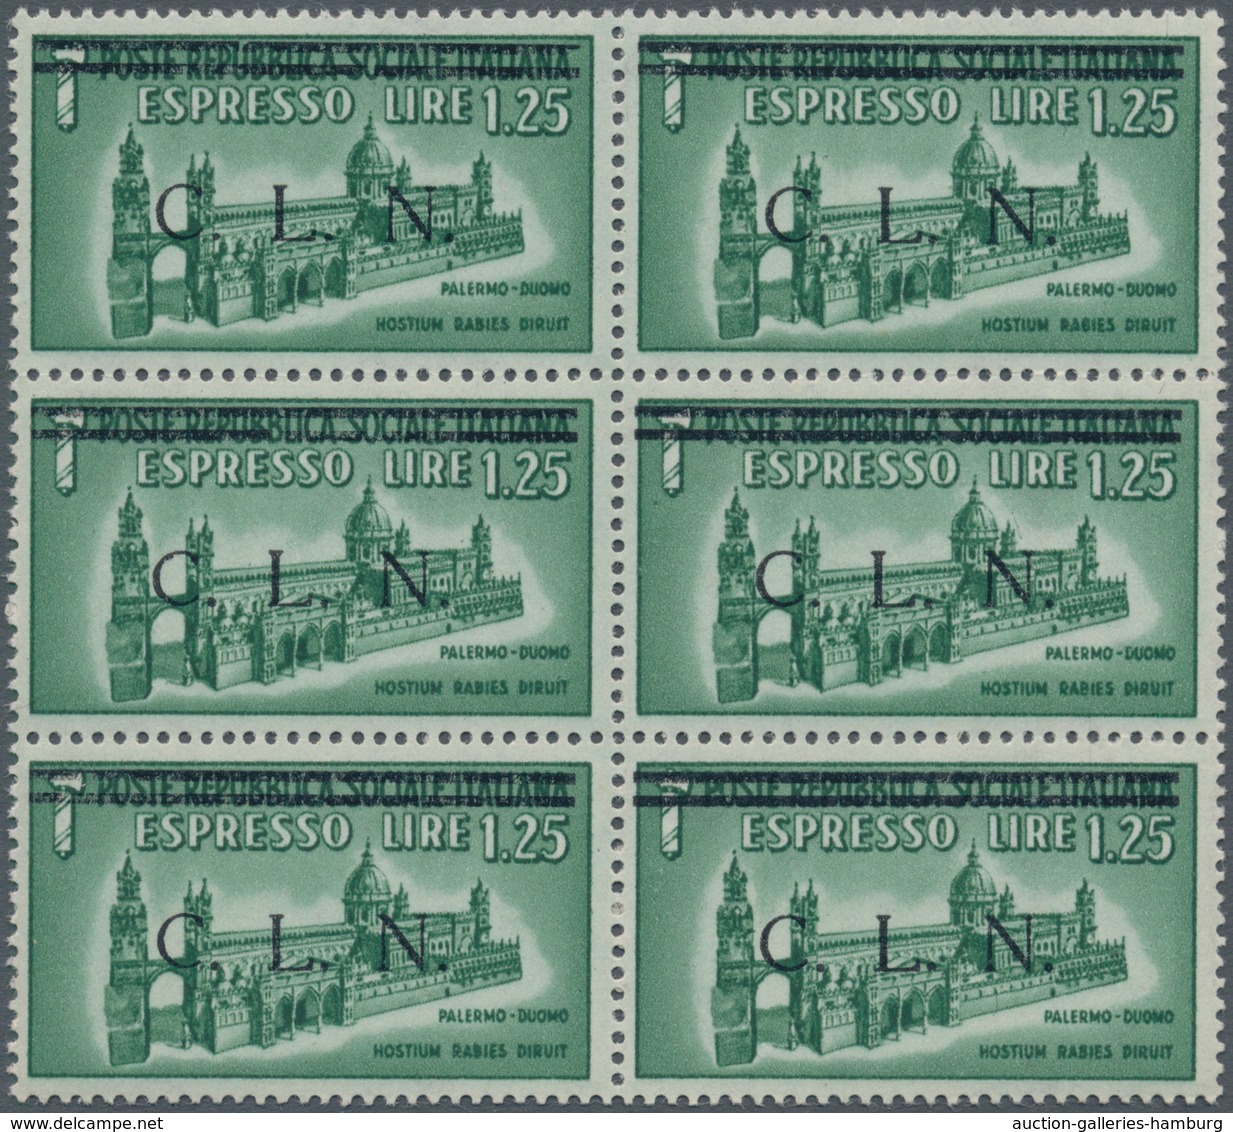 Italien - Lokalausgaben 1944/45 - Torino: 1944, C.L.N. TORINO Local Issue, 1,25 Lire Green, Express - Nationales Befreiungskomitee